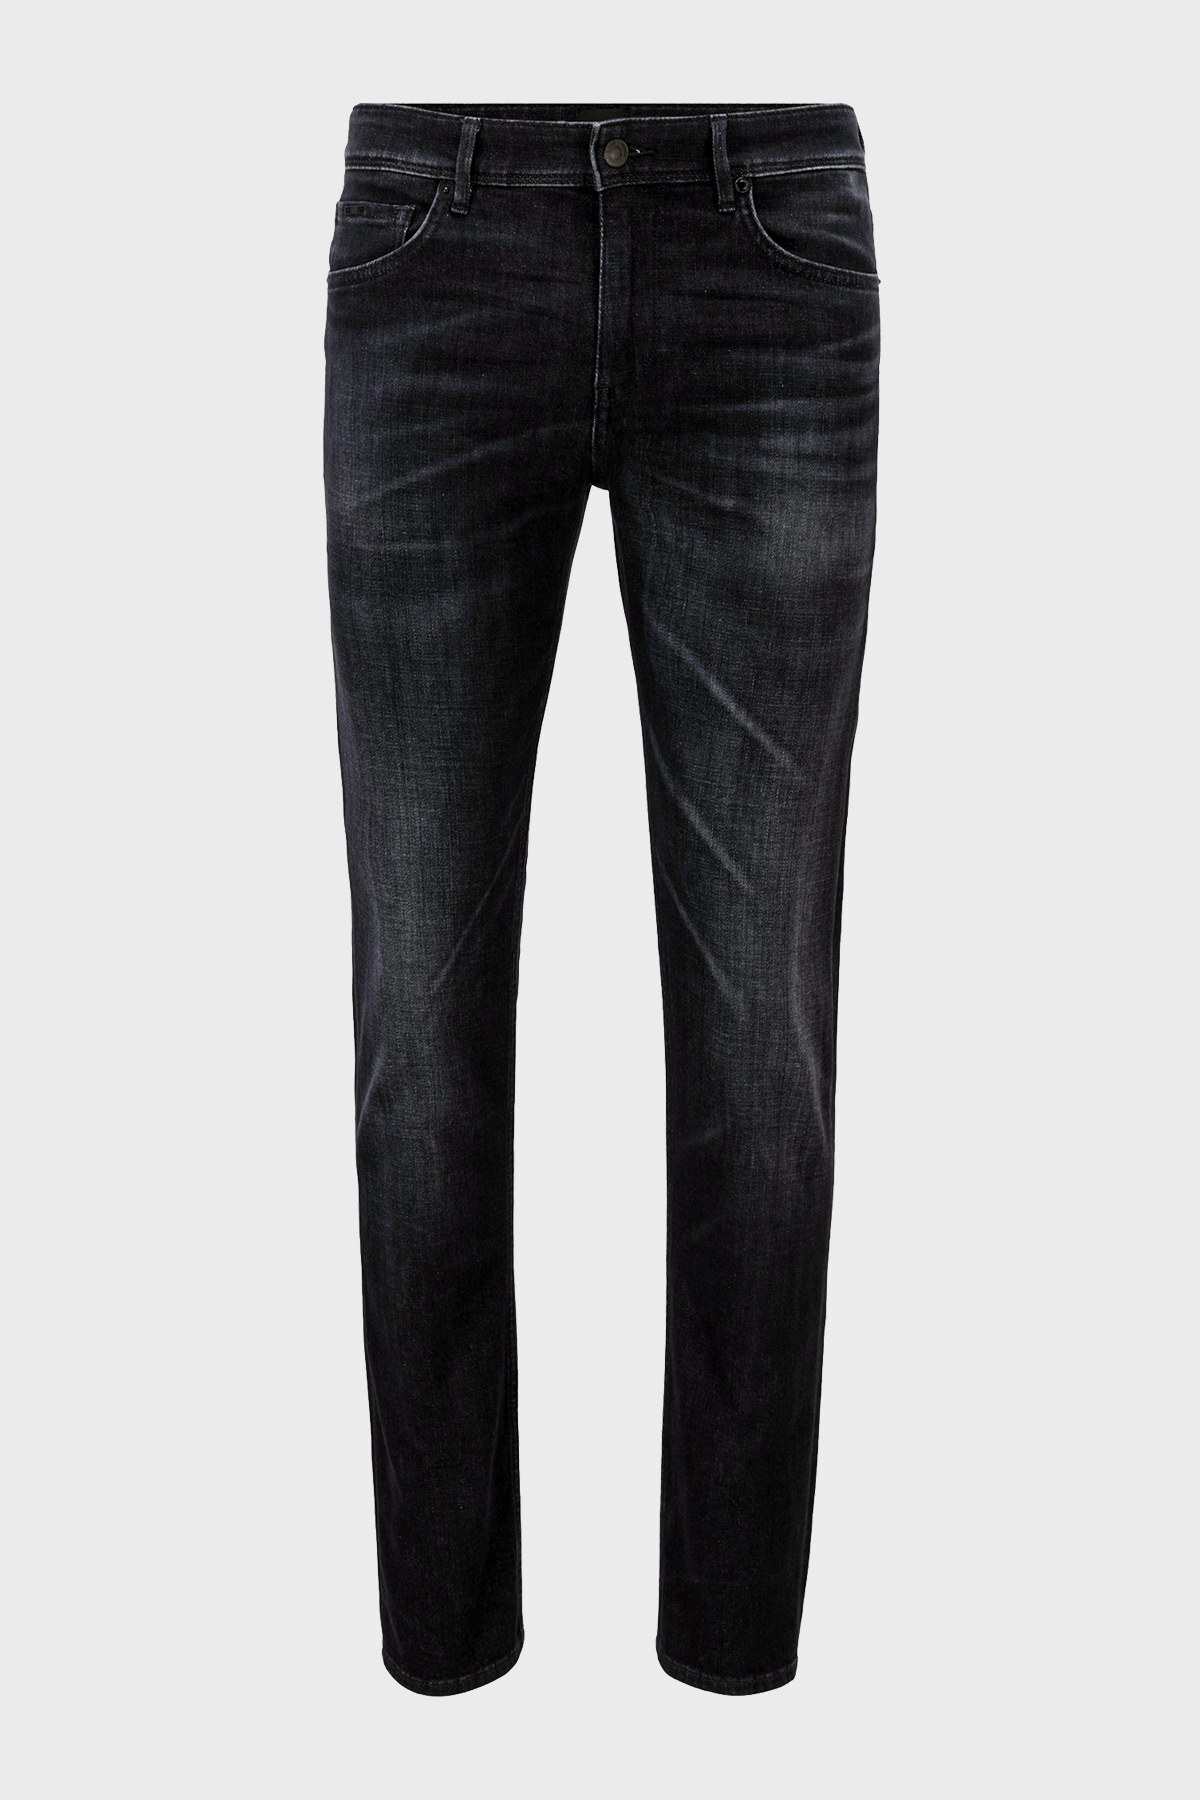 Hugo Boss Extra Slim Fit Düşük Bel Pamuklu Jeans Erkek Kot Pantolon 50453109 003 SİYAH